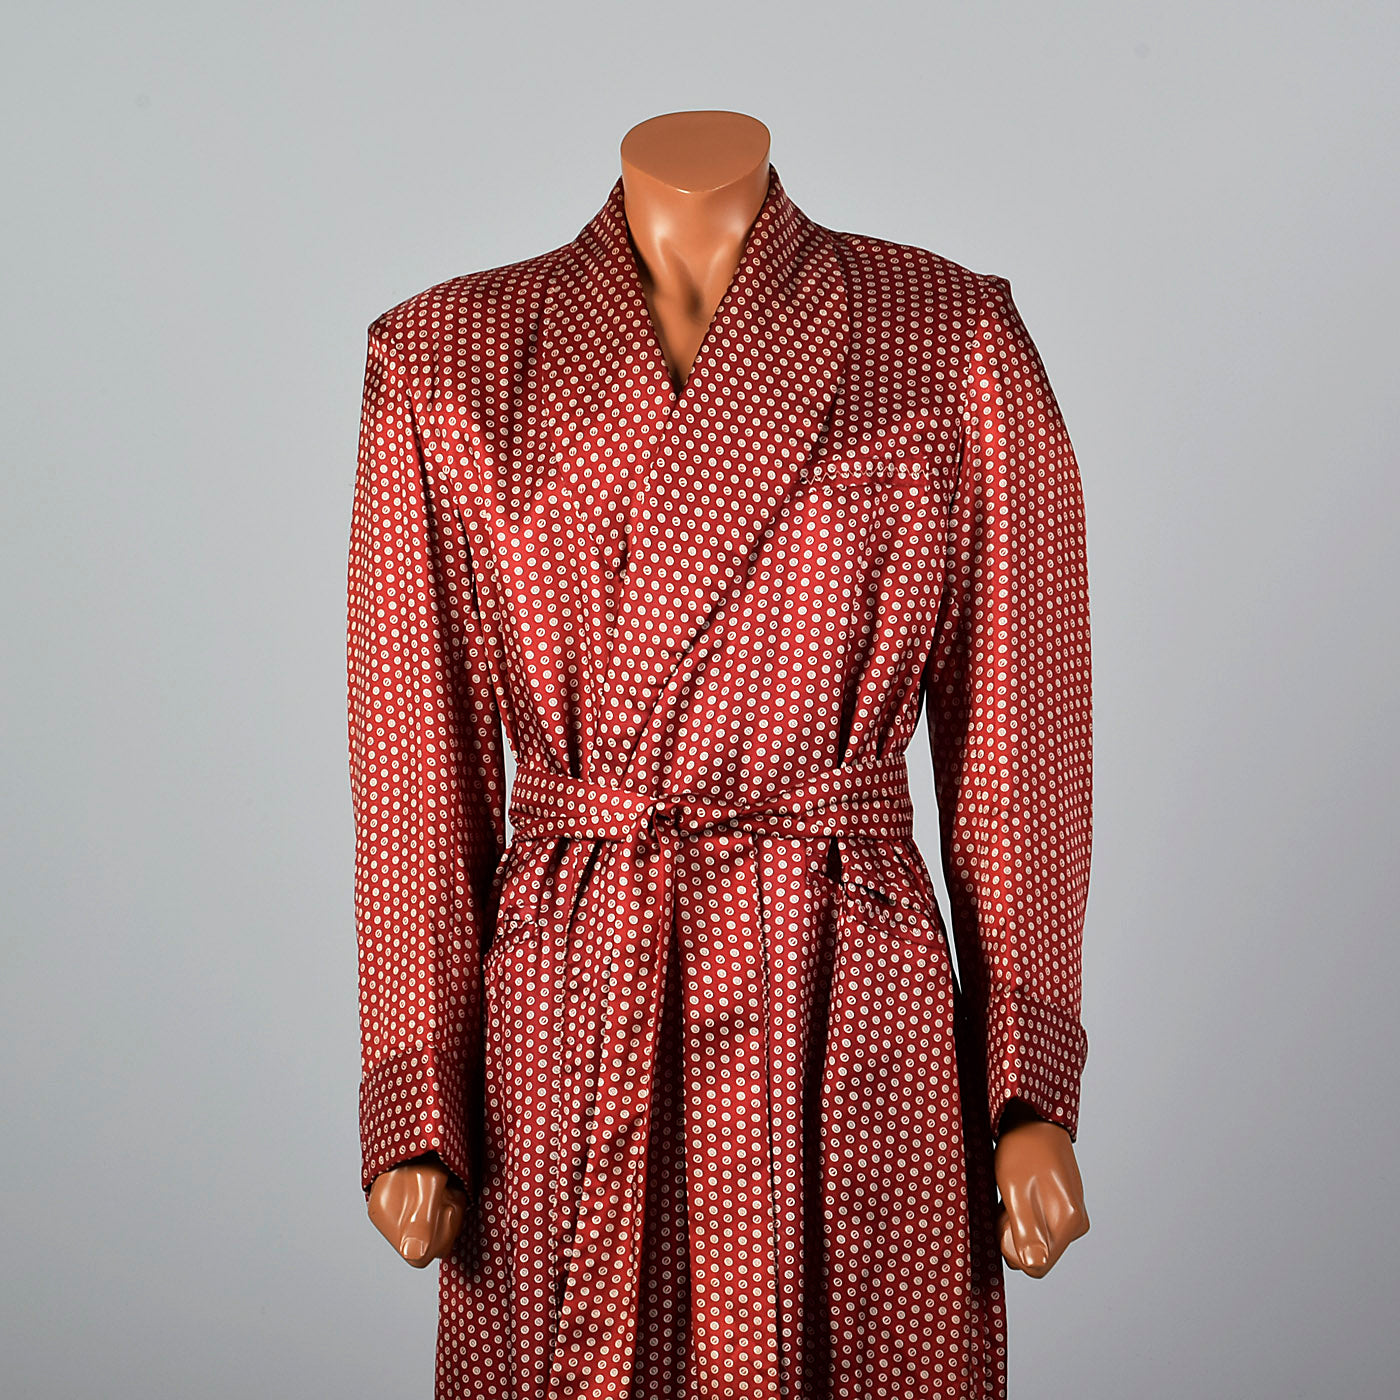 1950s Mens Deadstock Rayon Robe